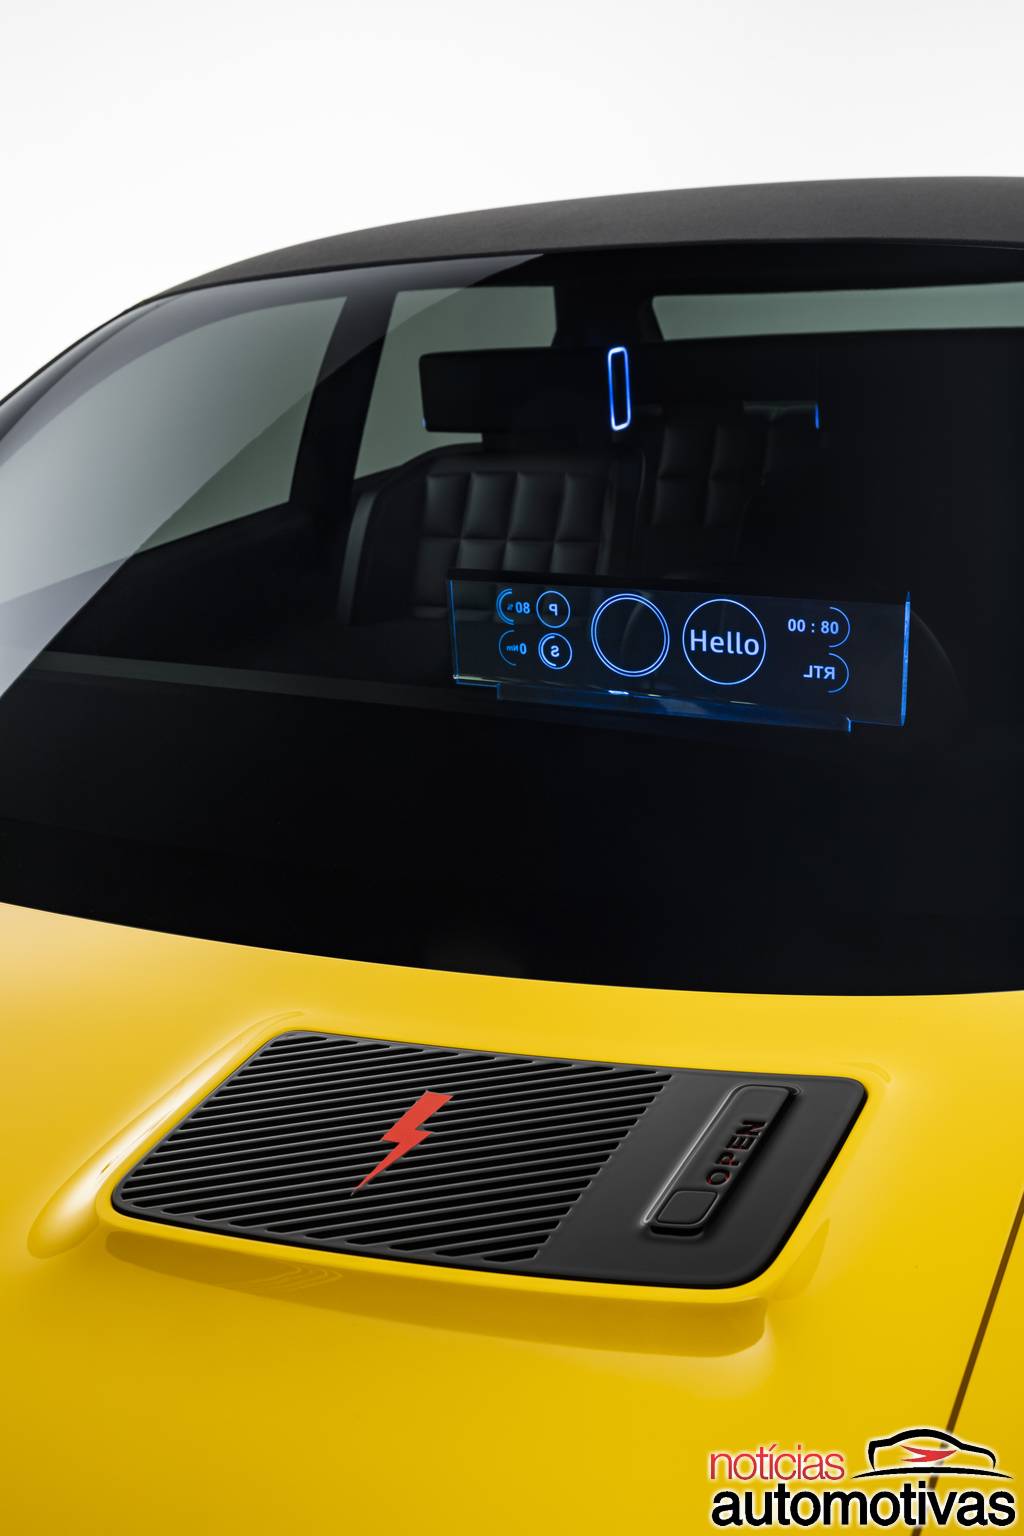 Renault 5 renascerá como carro elétrico compacto na Europa 